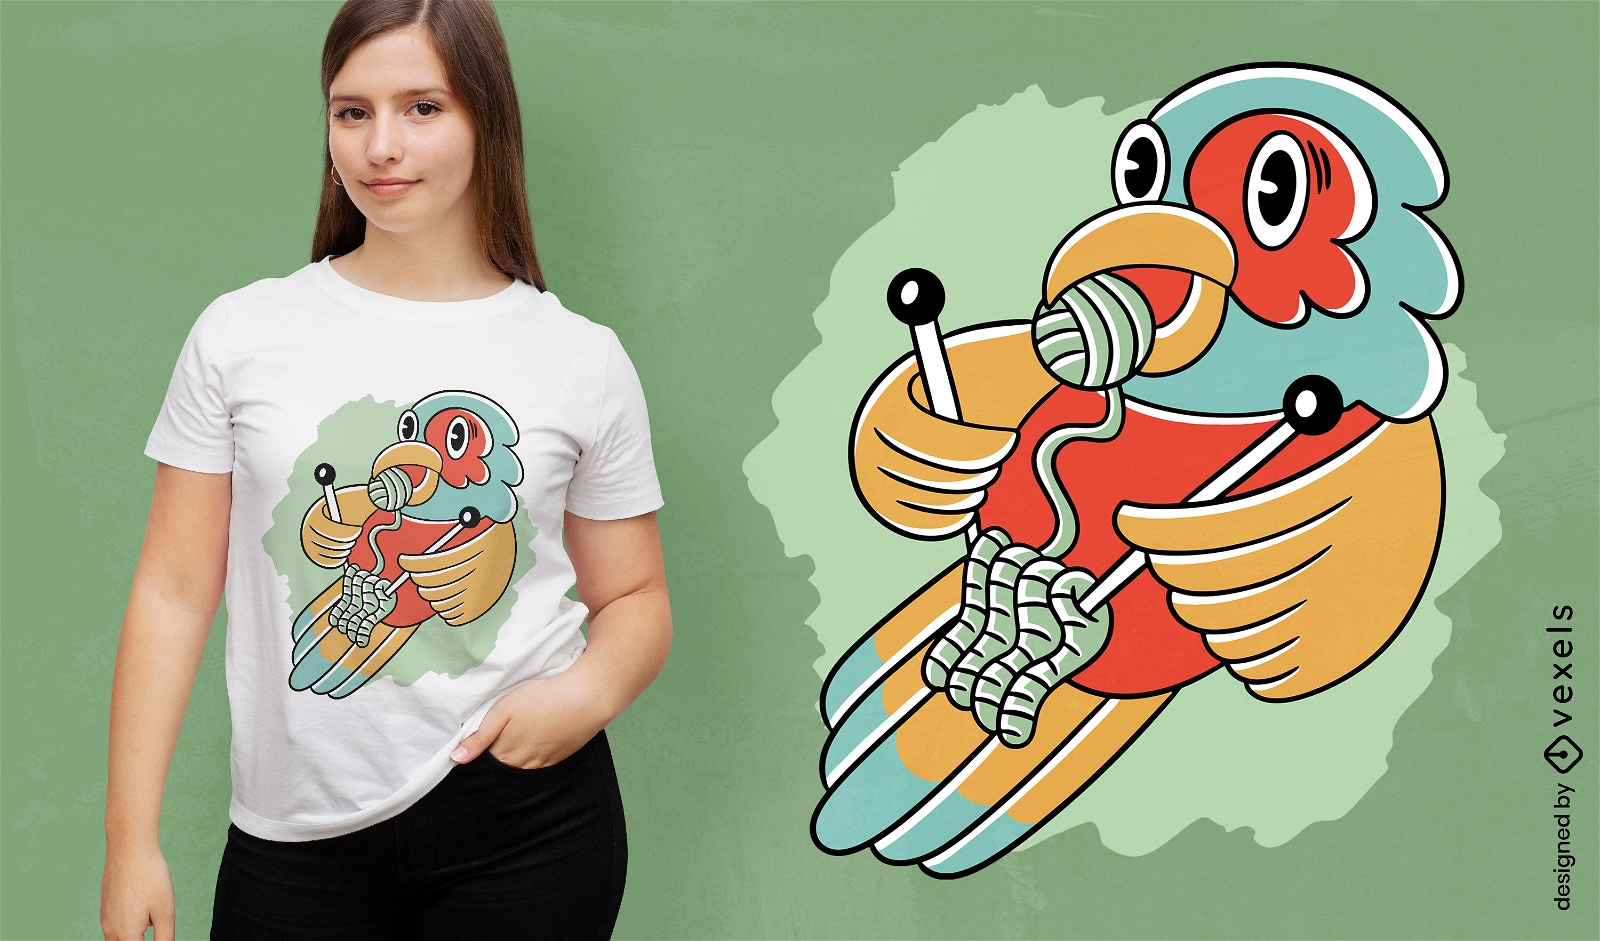 Parrot knitting t-shirt design 